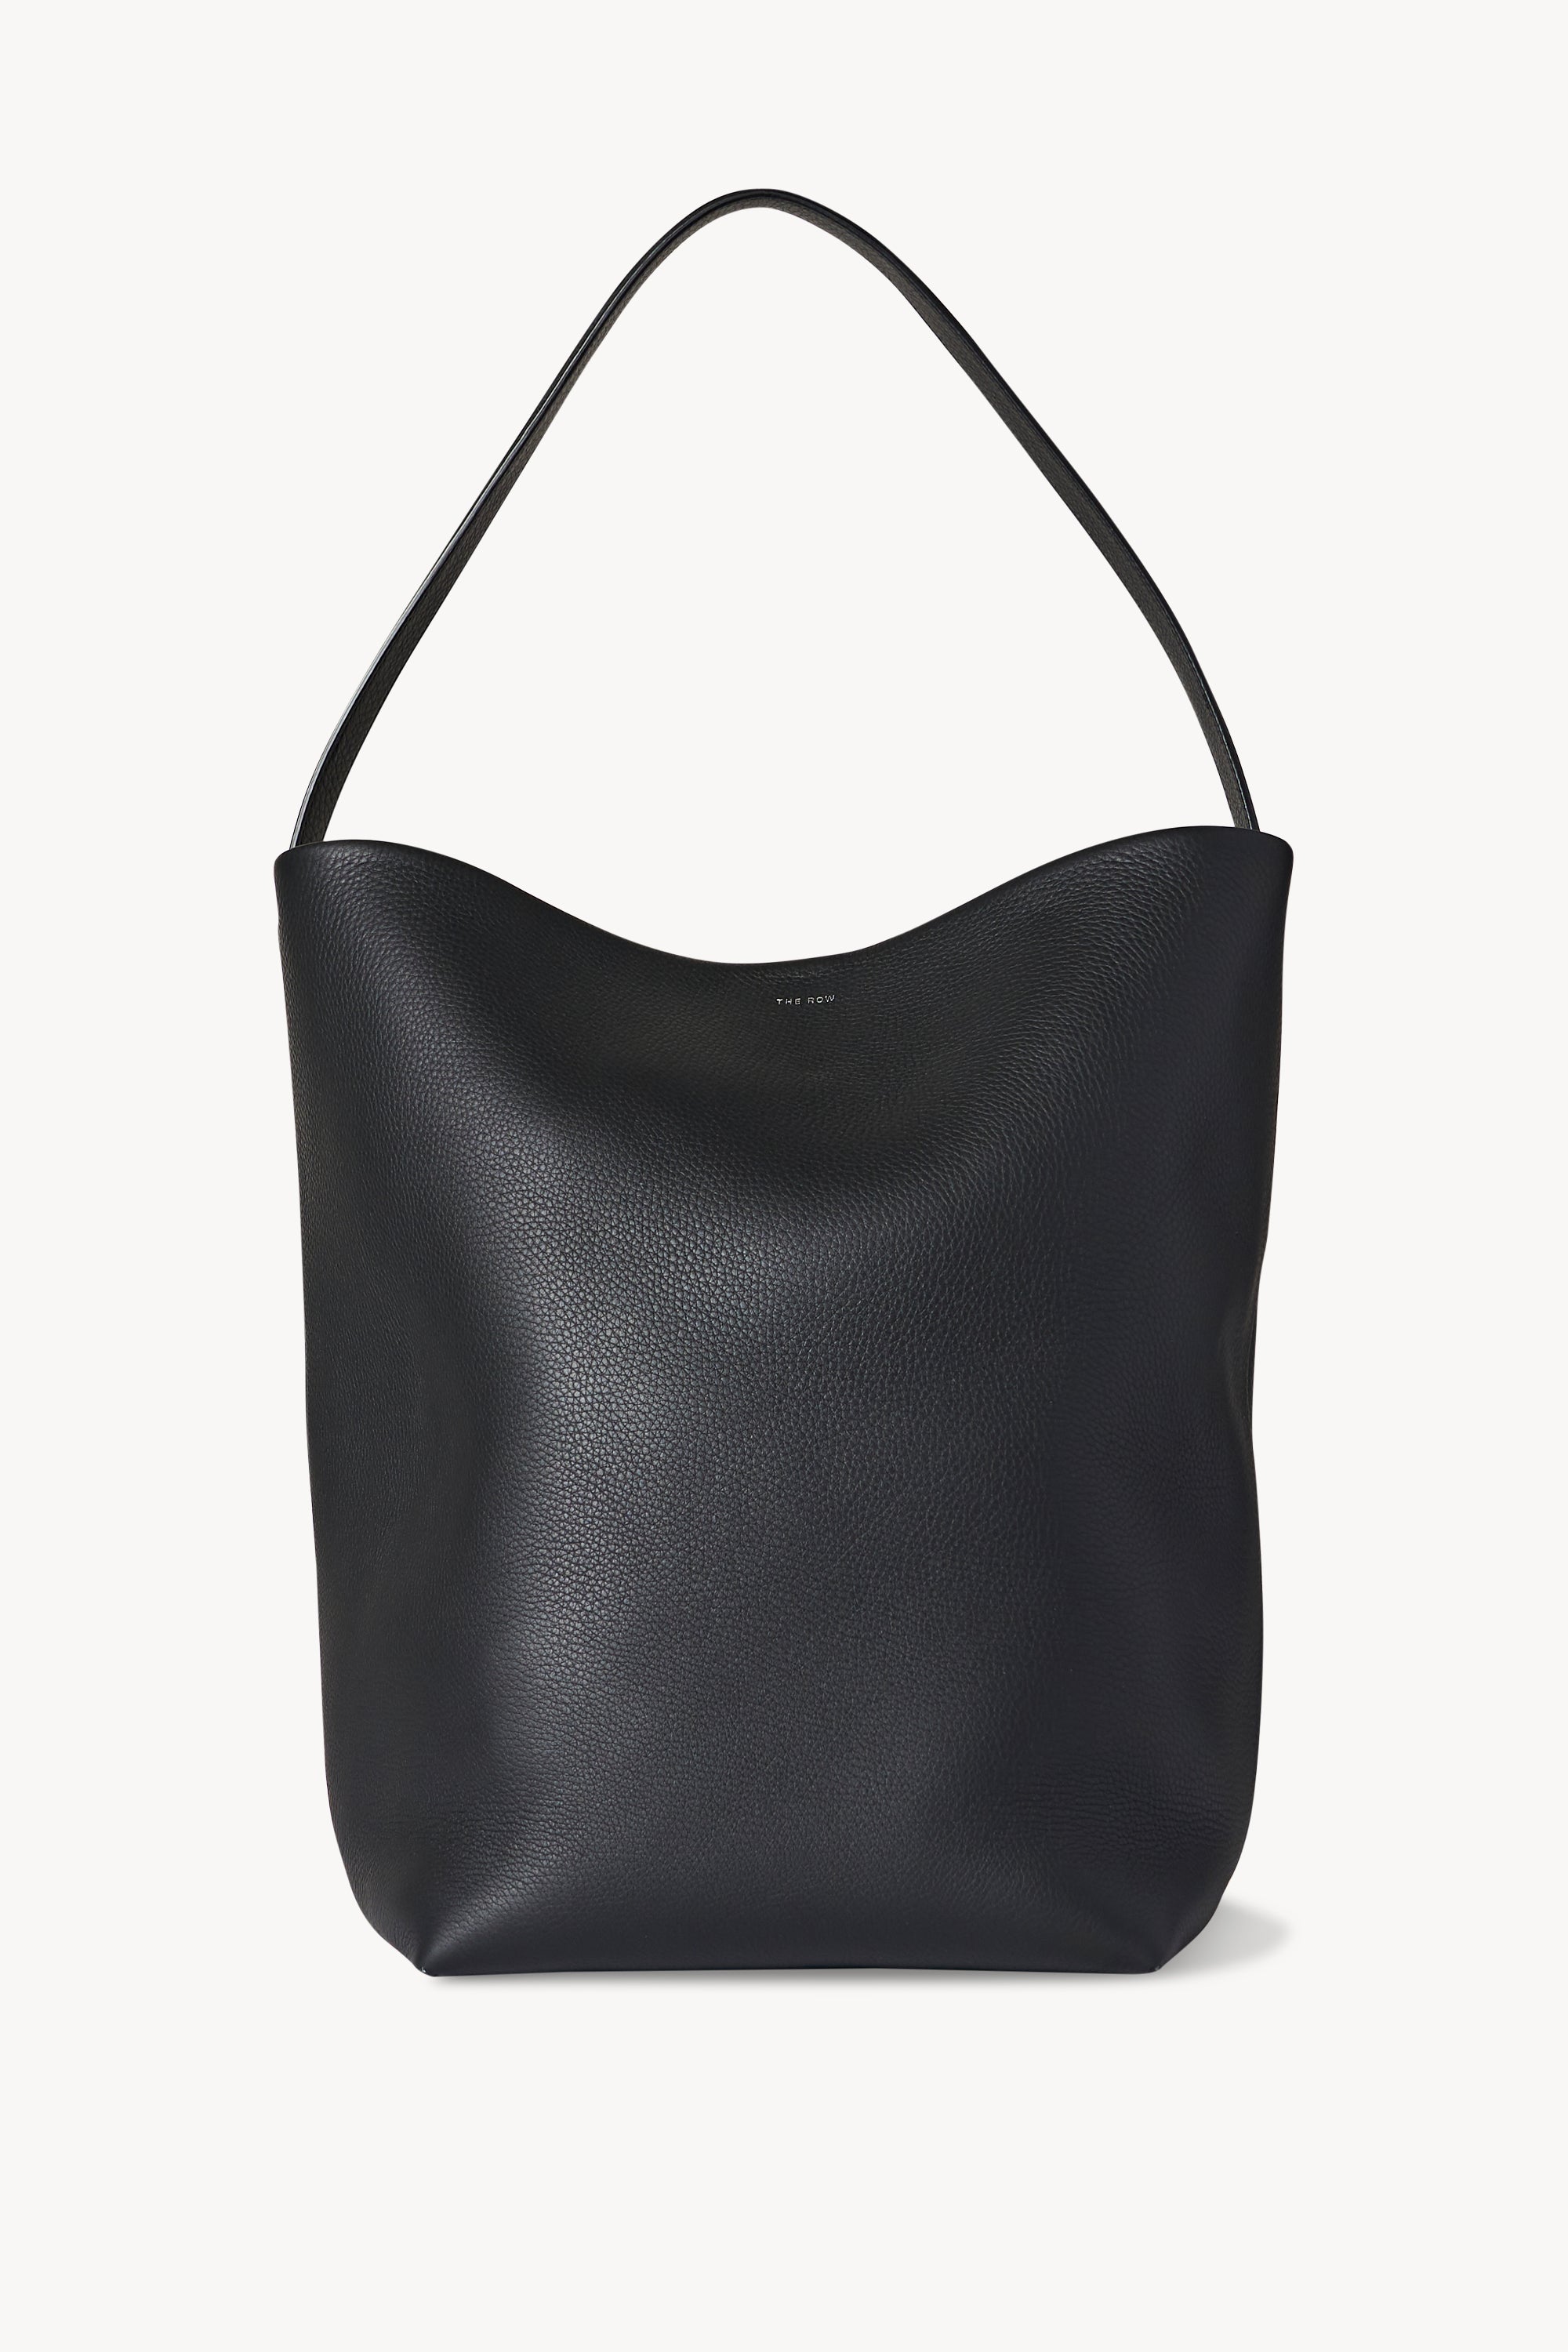 Fashion Designer Handbag Women Canvas Handbags Large Capacity Crossbody Bags  for Women 2021 New Shoulder Bags Tote Bag - AliExpress